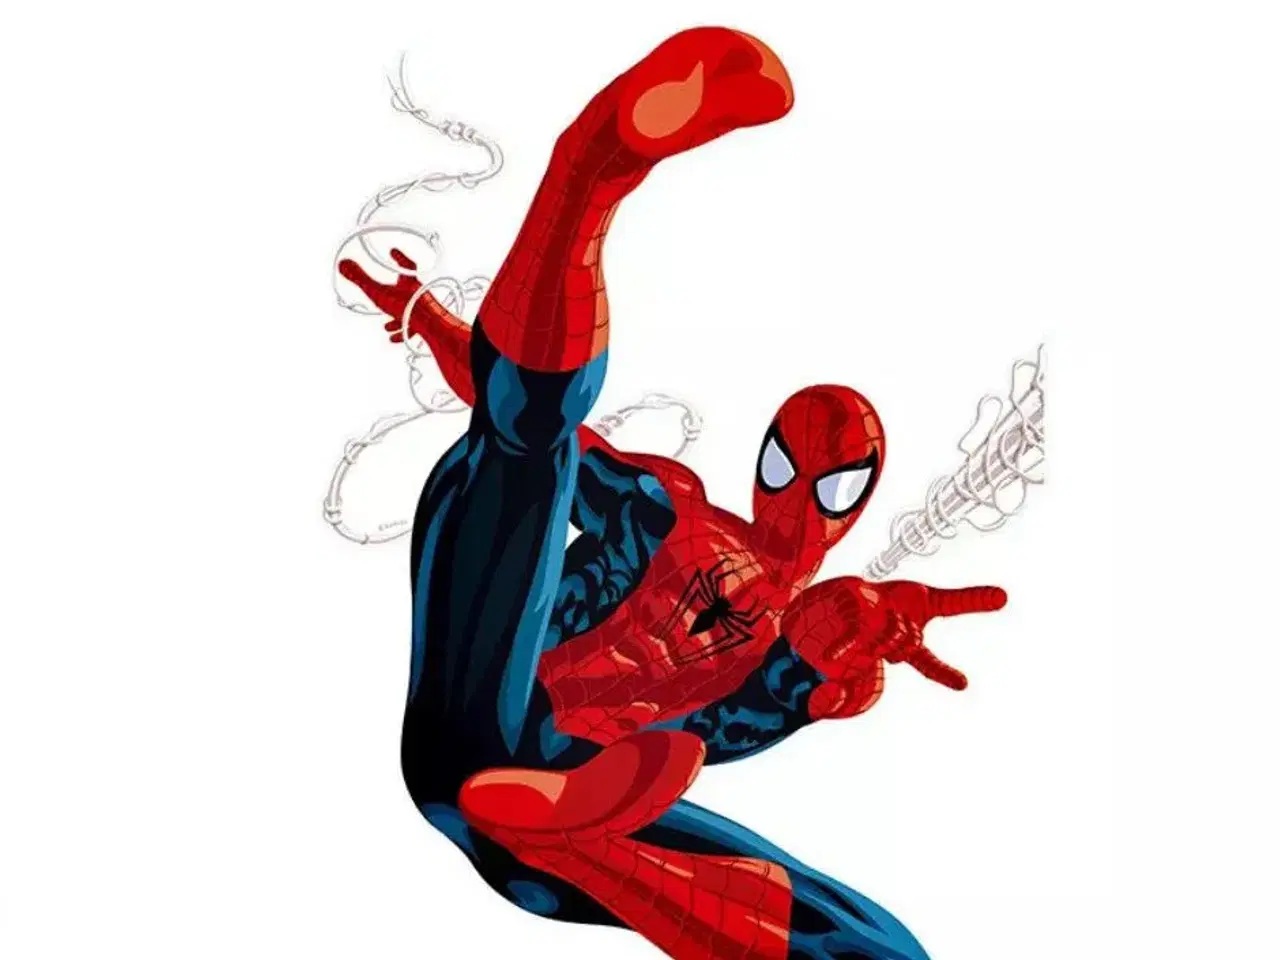 Billede 1 - Spiderman wallstickers wallsticker med Spiderman